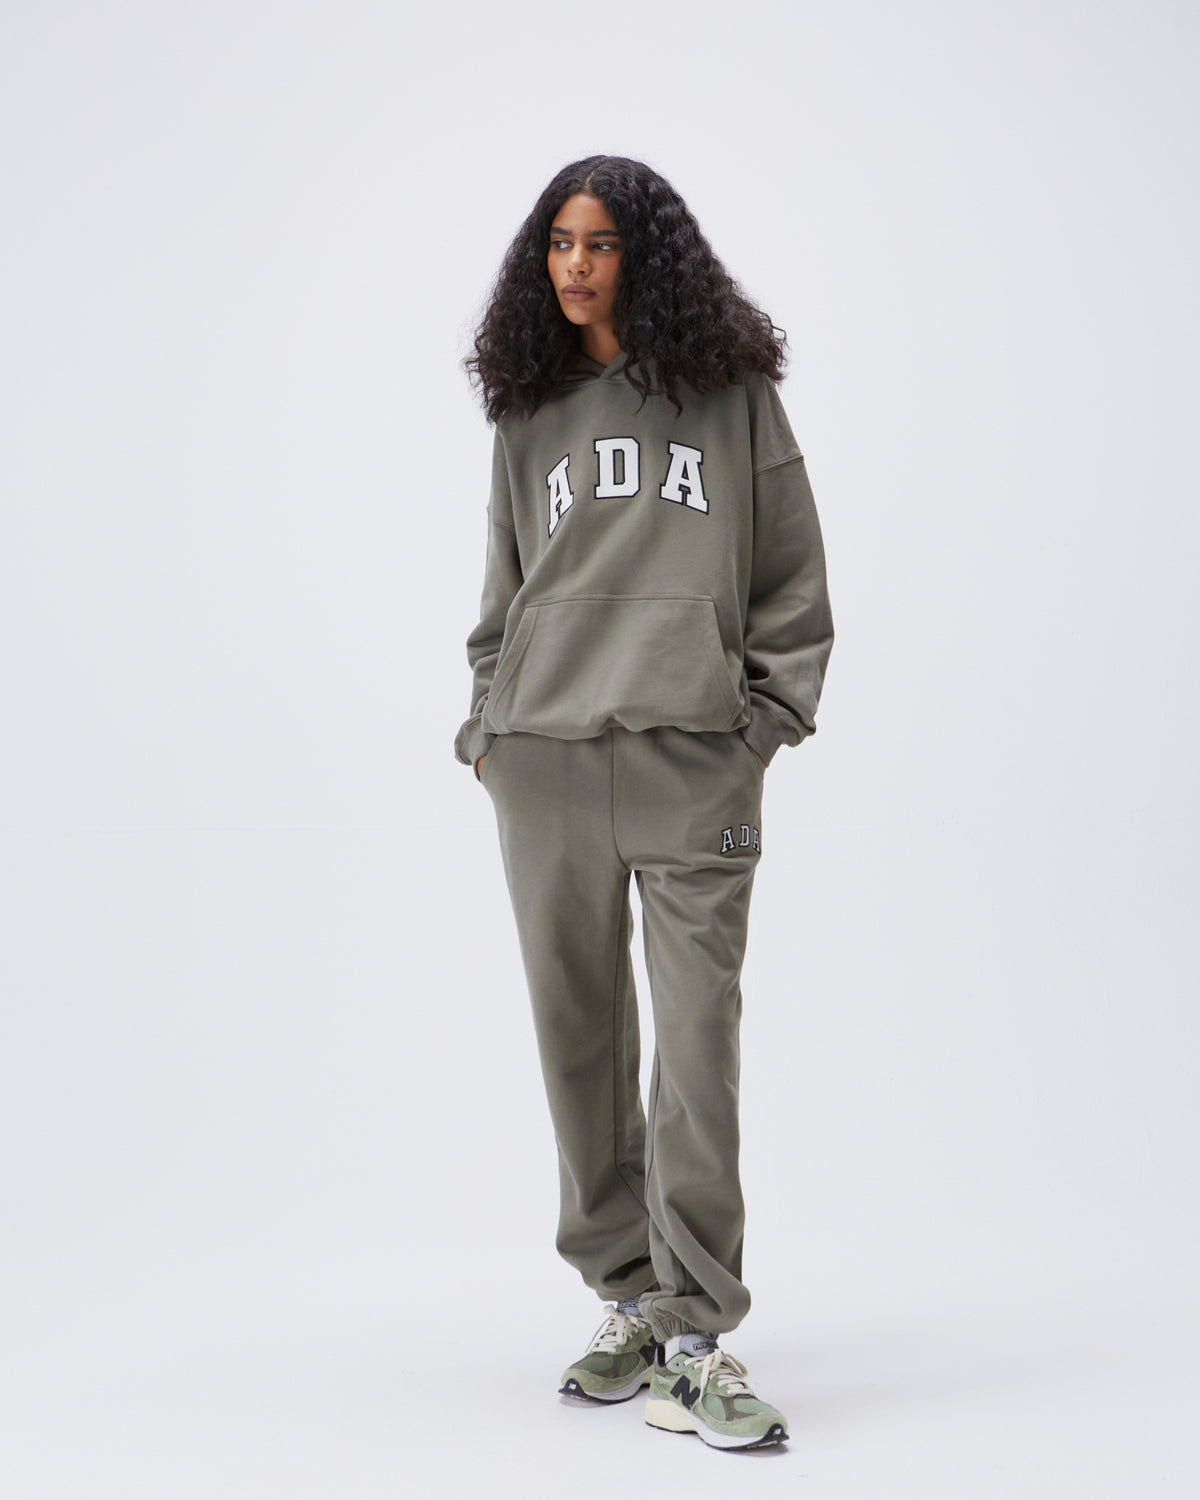 Women's 'ADA' Olive Green Jogger Sweatpants | Adanola